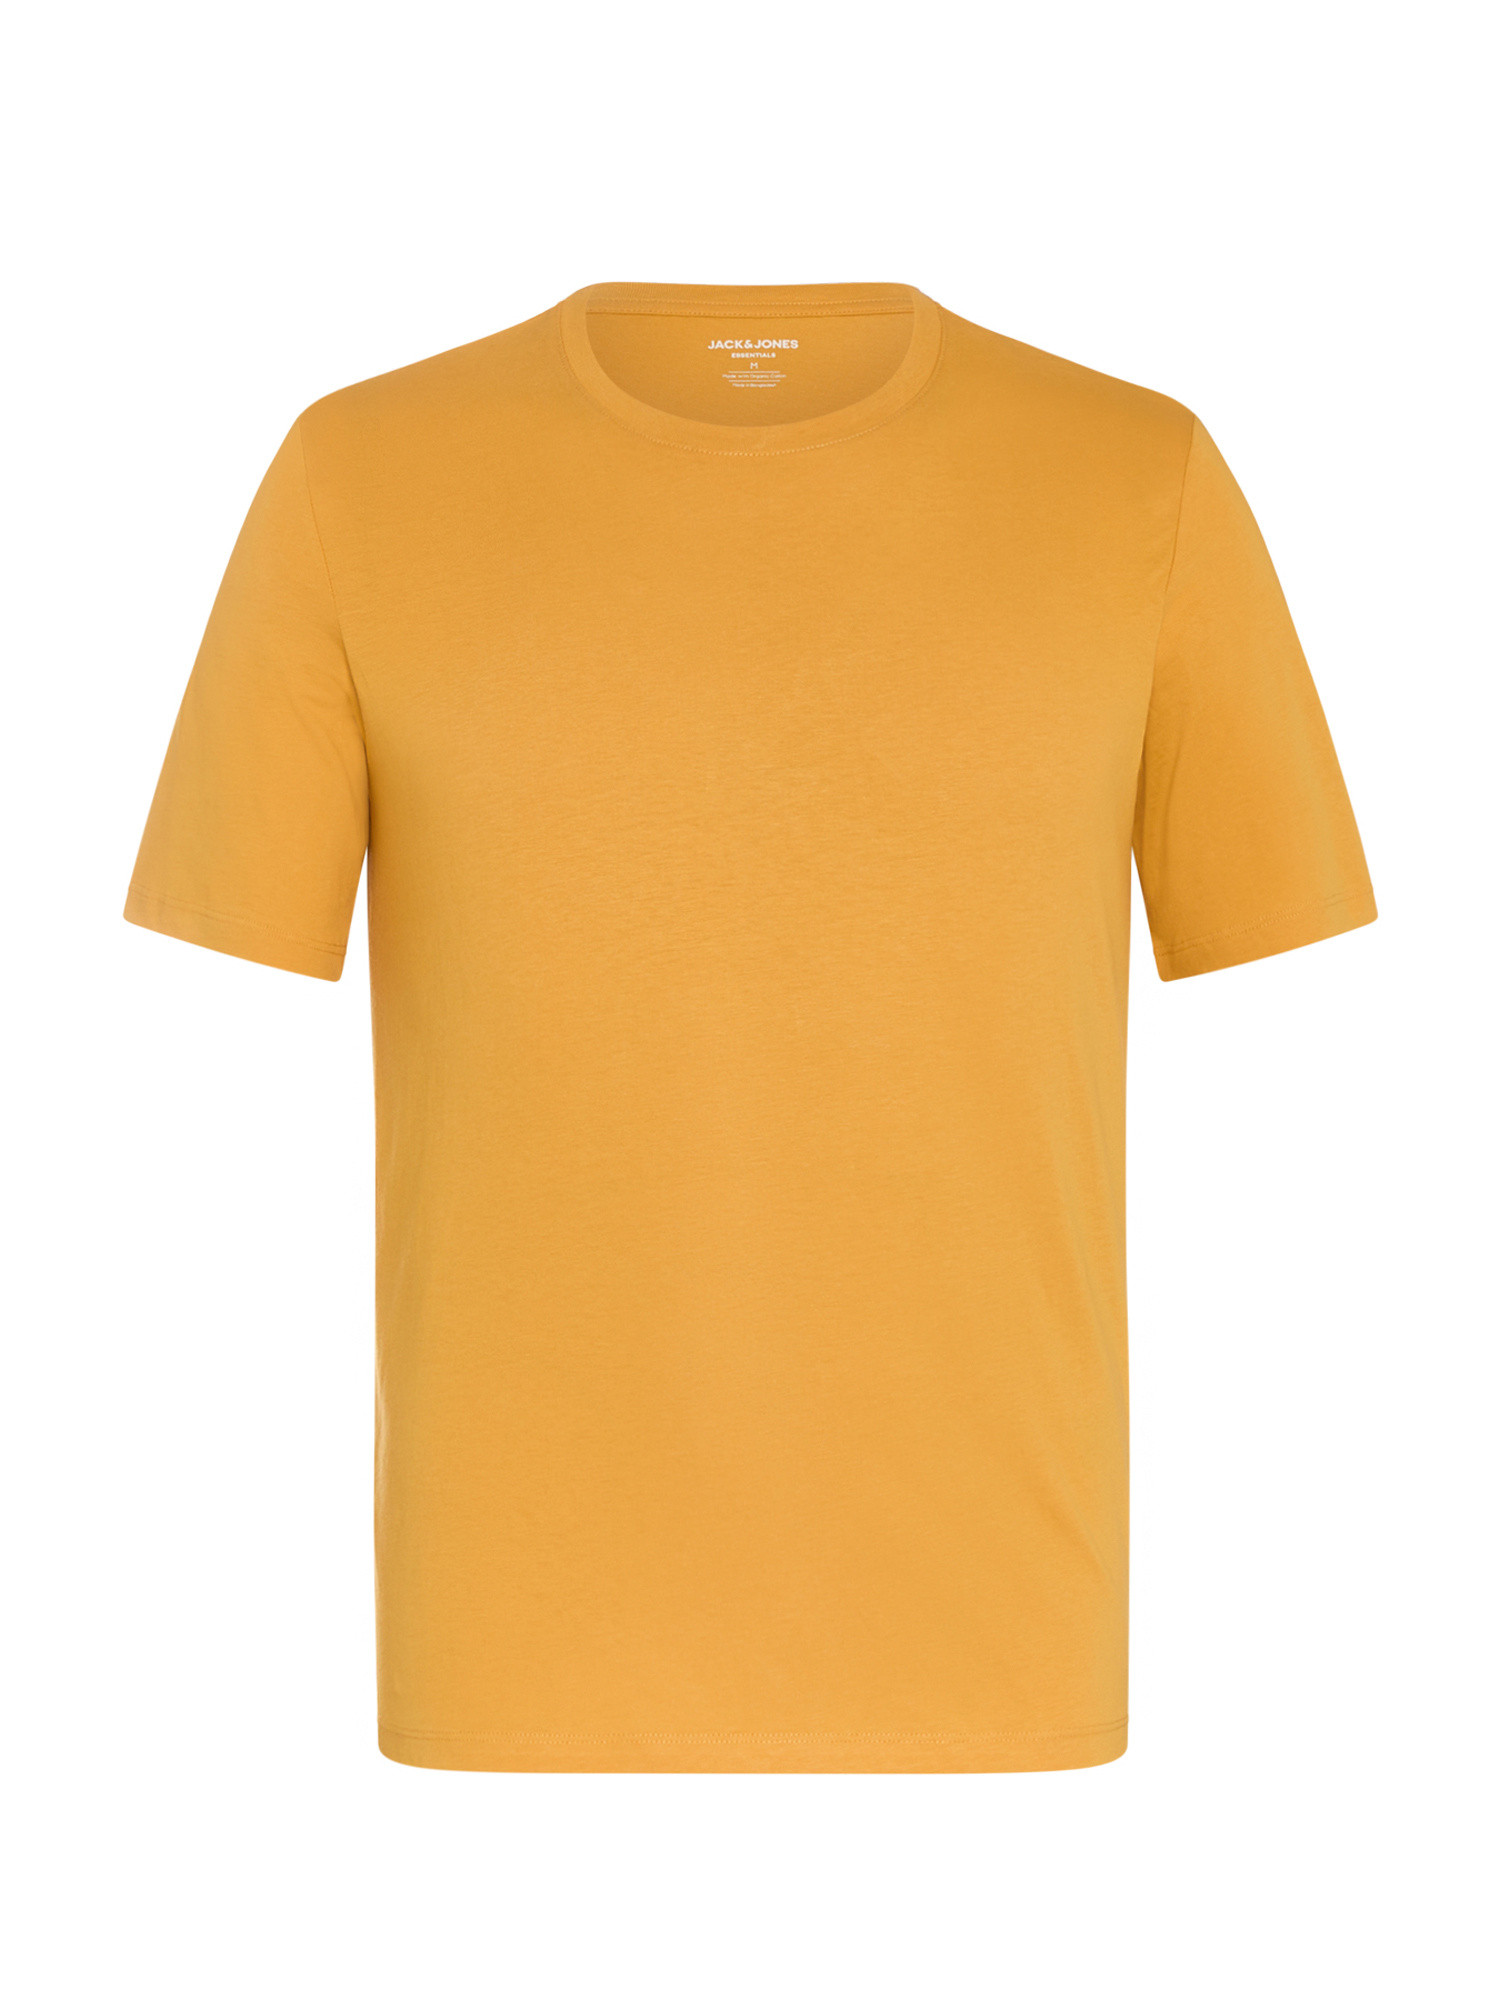 Jack & Jones - Cotton T-shirt, Yellow, large image number 0